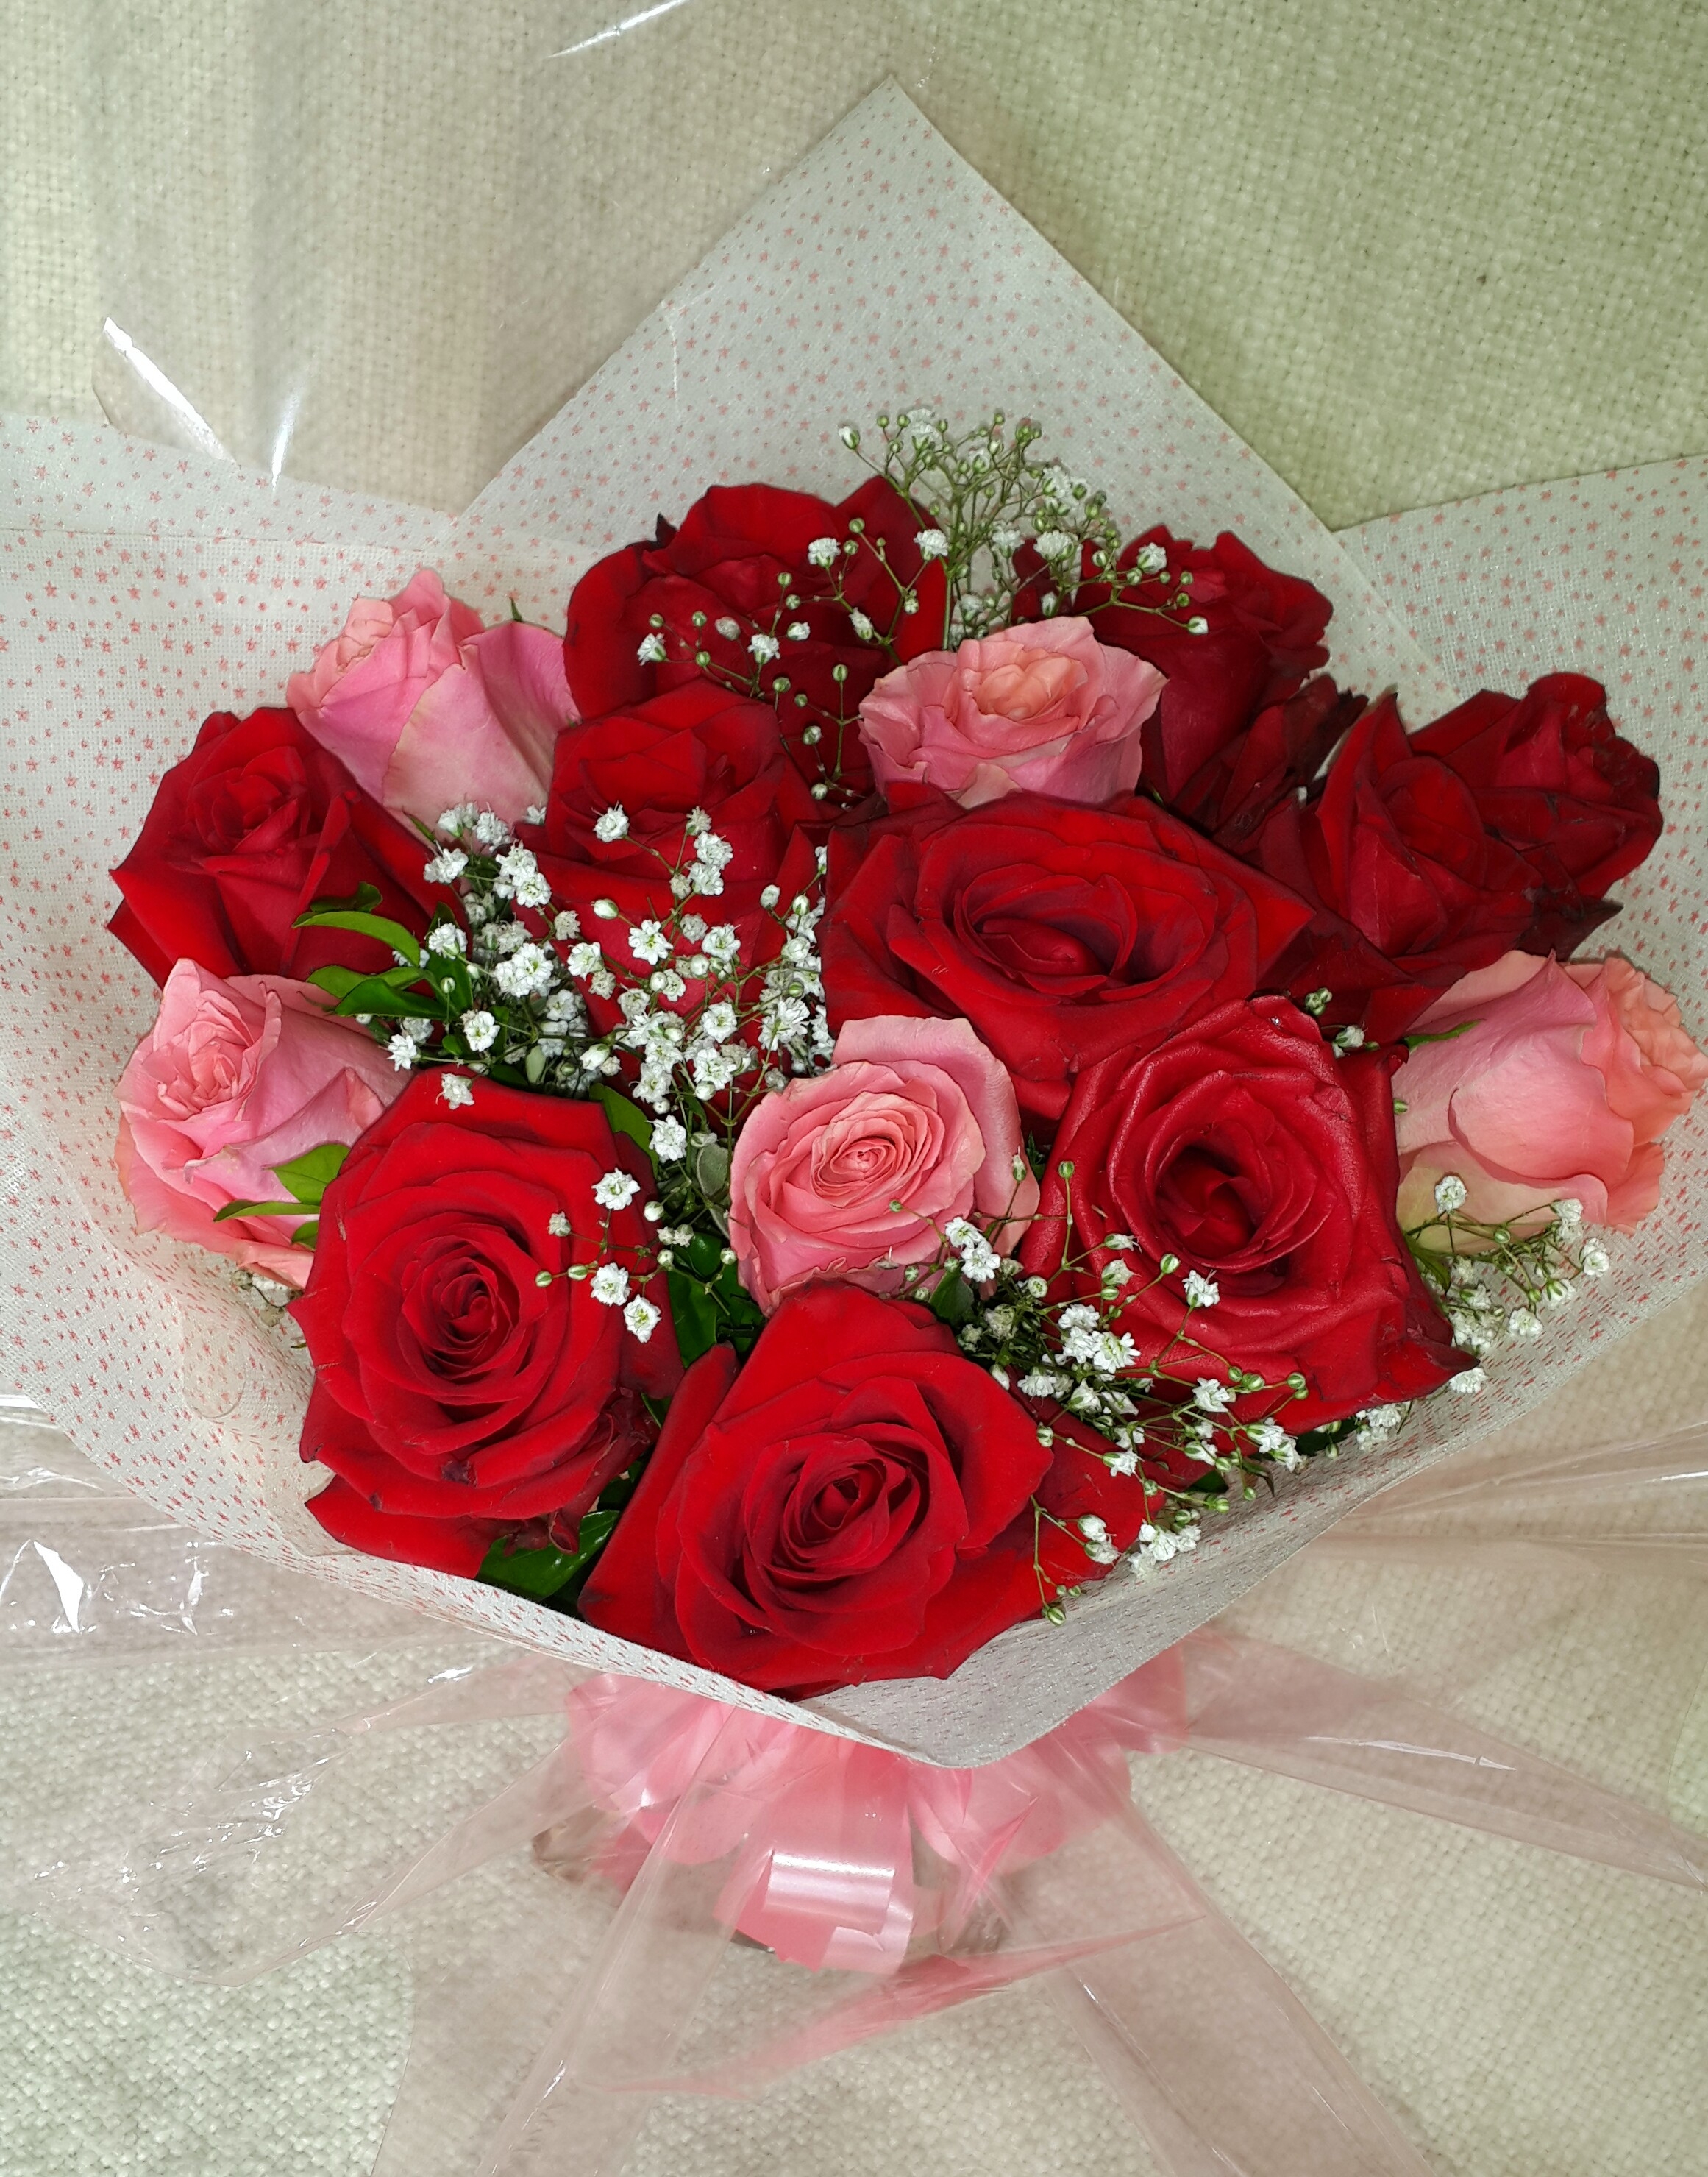 flowerandballooncompany.com » Blog Archive » 15 Red & Pink Roses ...